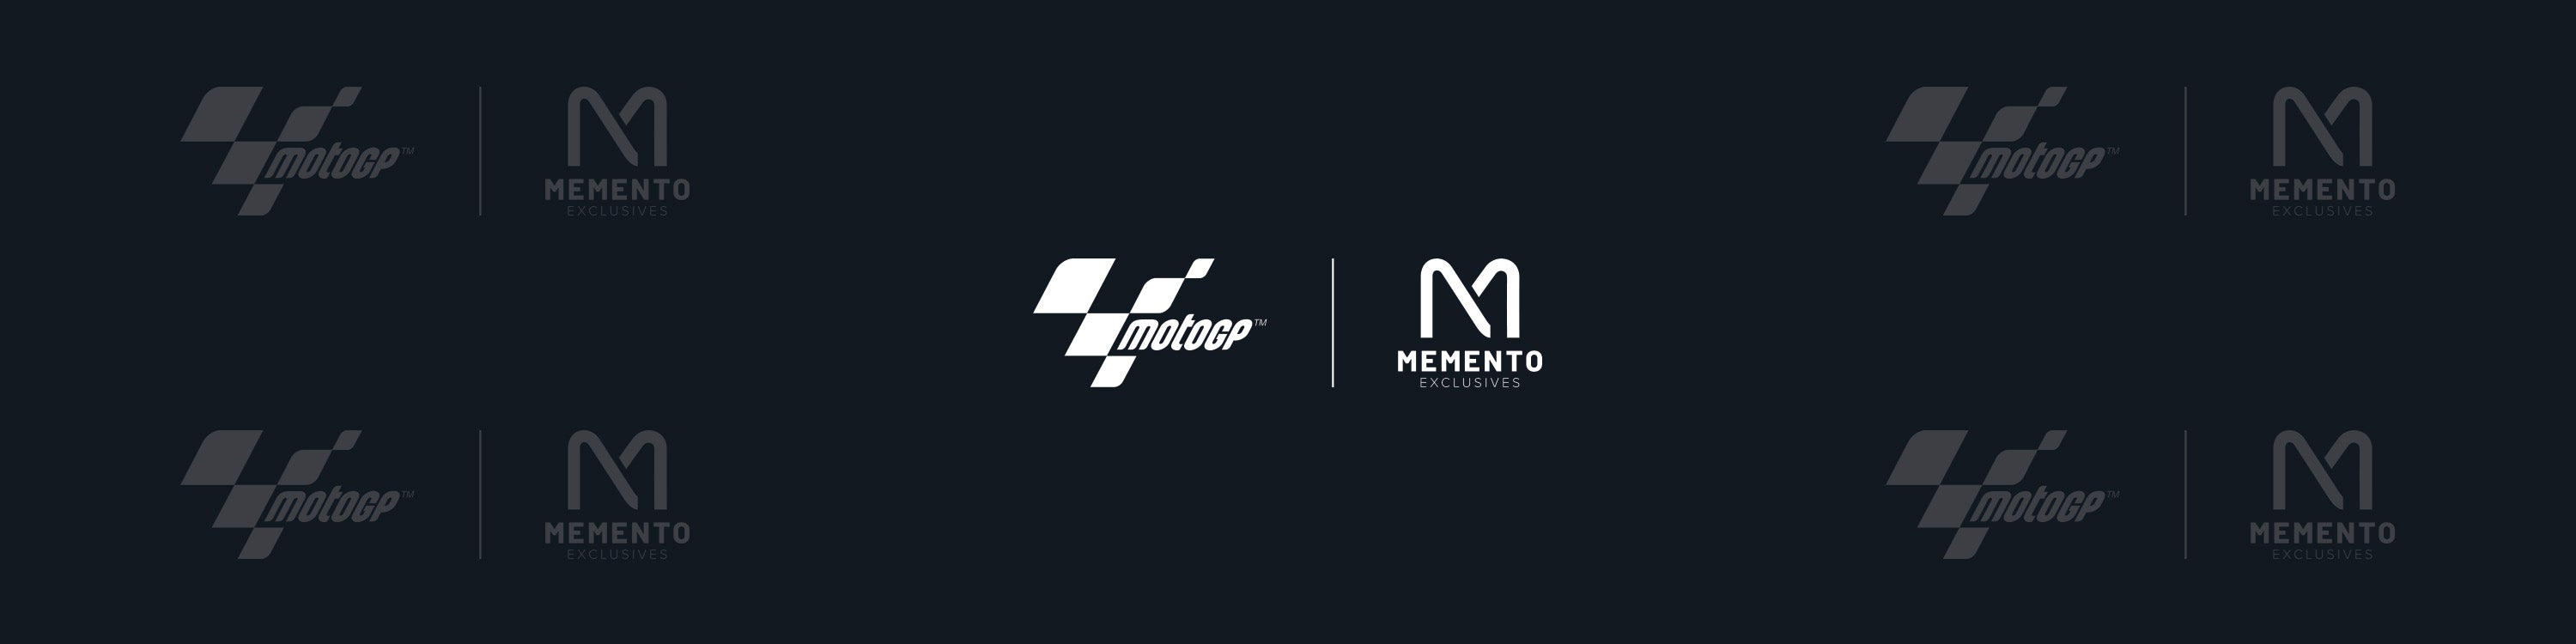 MotoGP™ Signs Multiple-year Memorabilia Partnership with Memento Exclusives